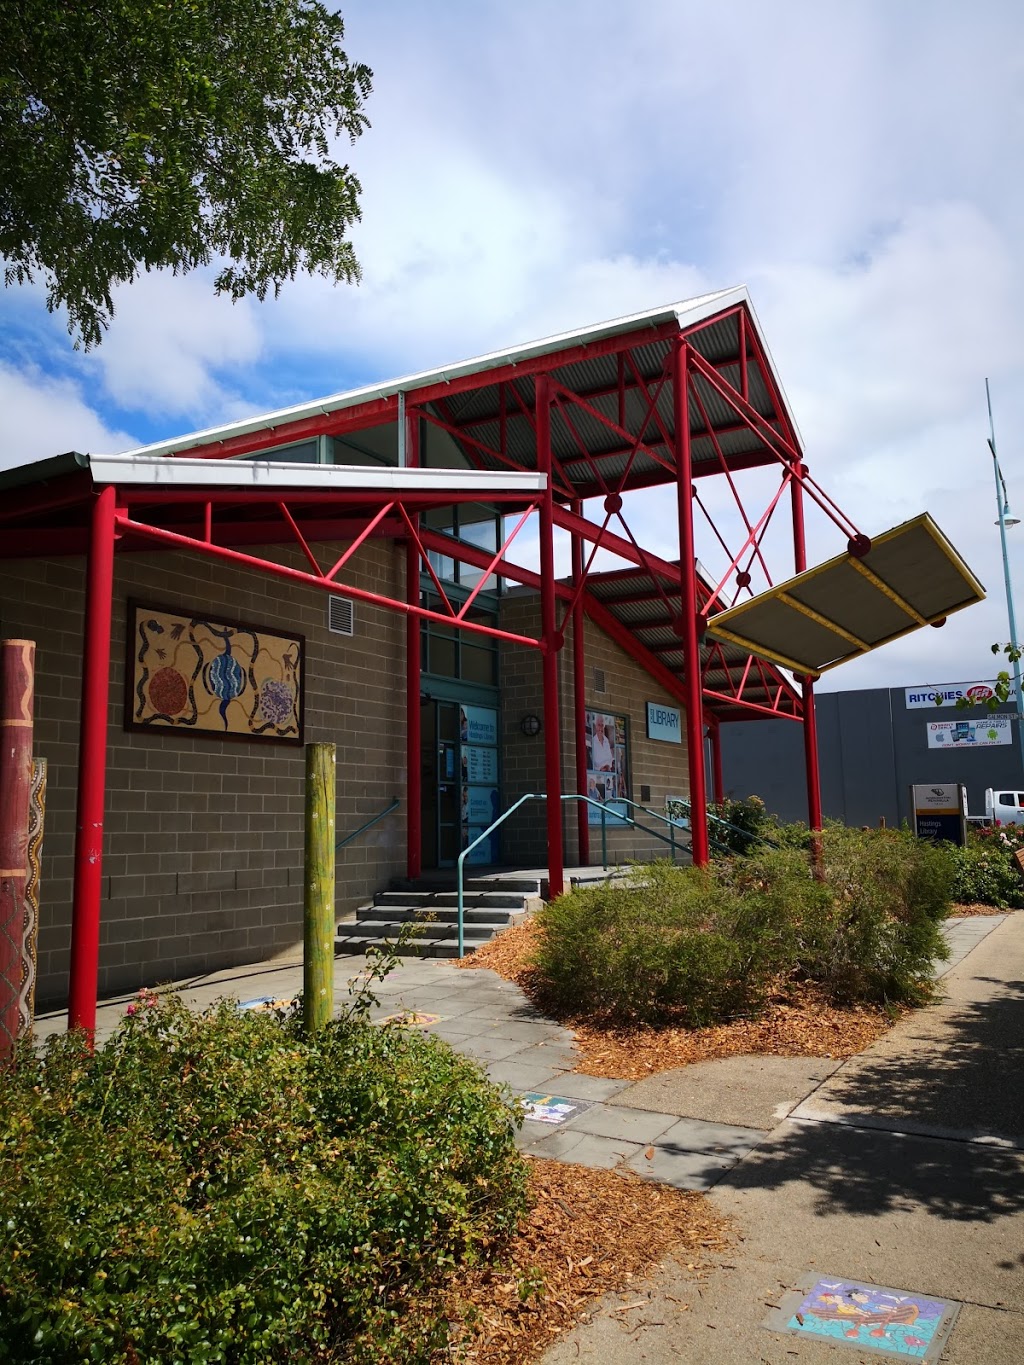 Mornington Peninsula Libraries - Hastings Library | library | 7 High St, Hastings VIC 3915, Australia | 0359501710 OR +61 3 5950 1710